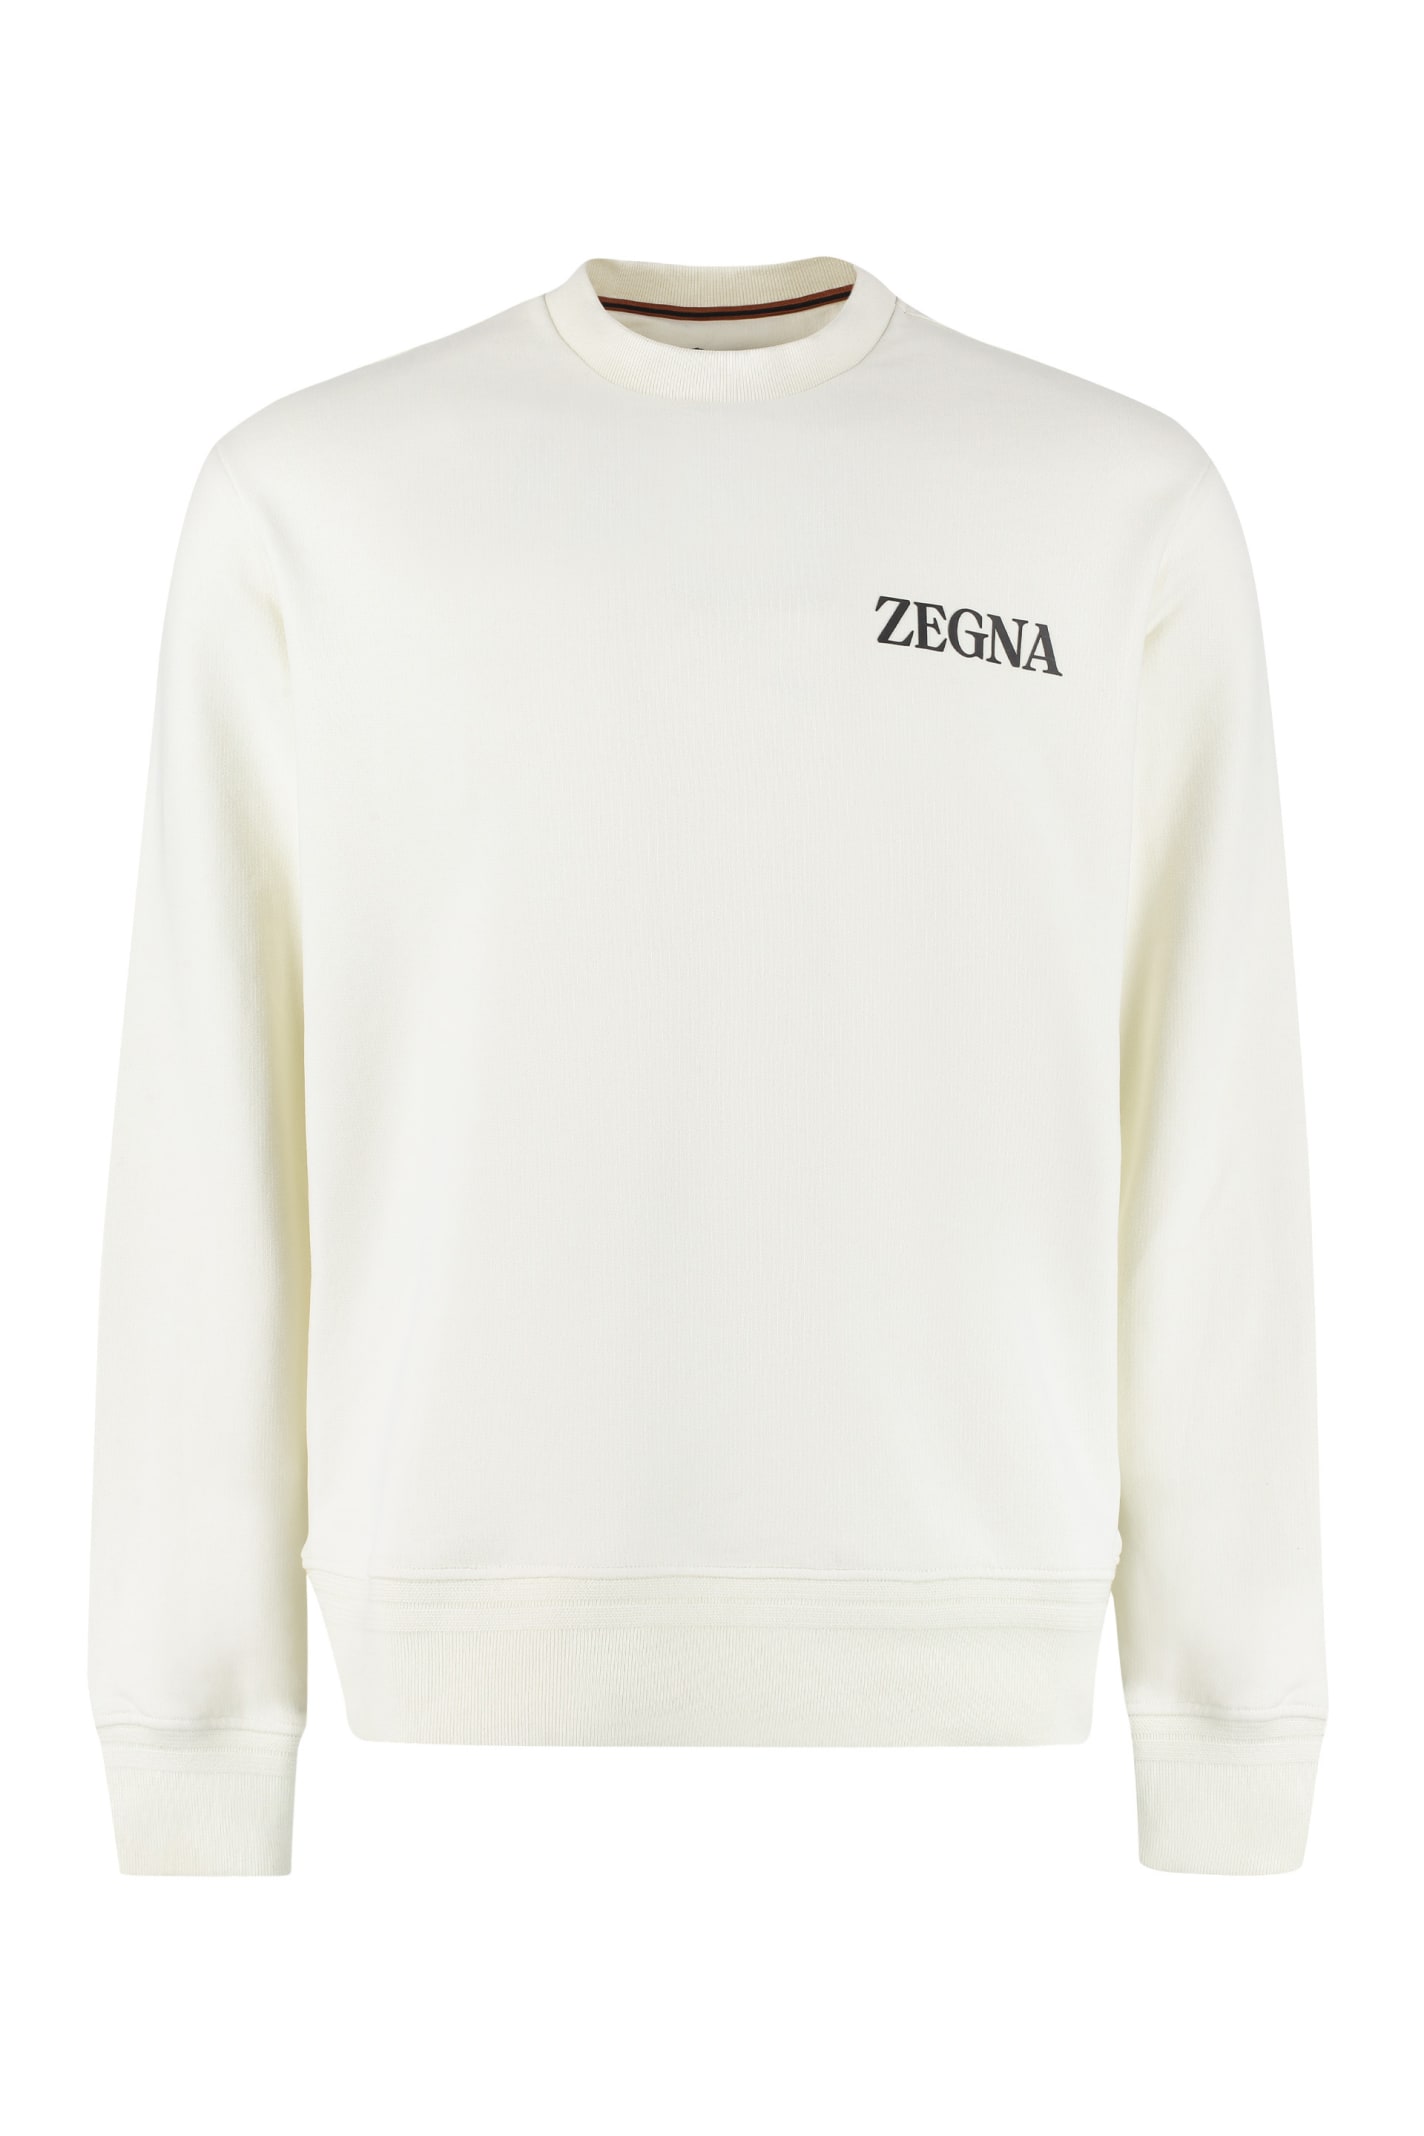 Z Zegna Logo Detail Cotton Sweatshirt